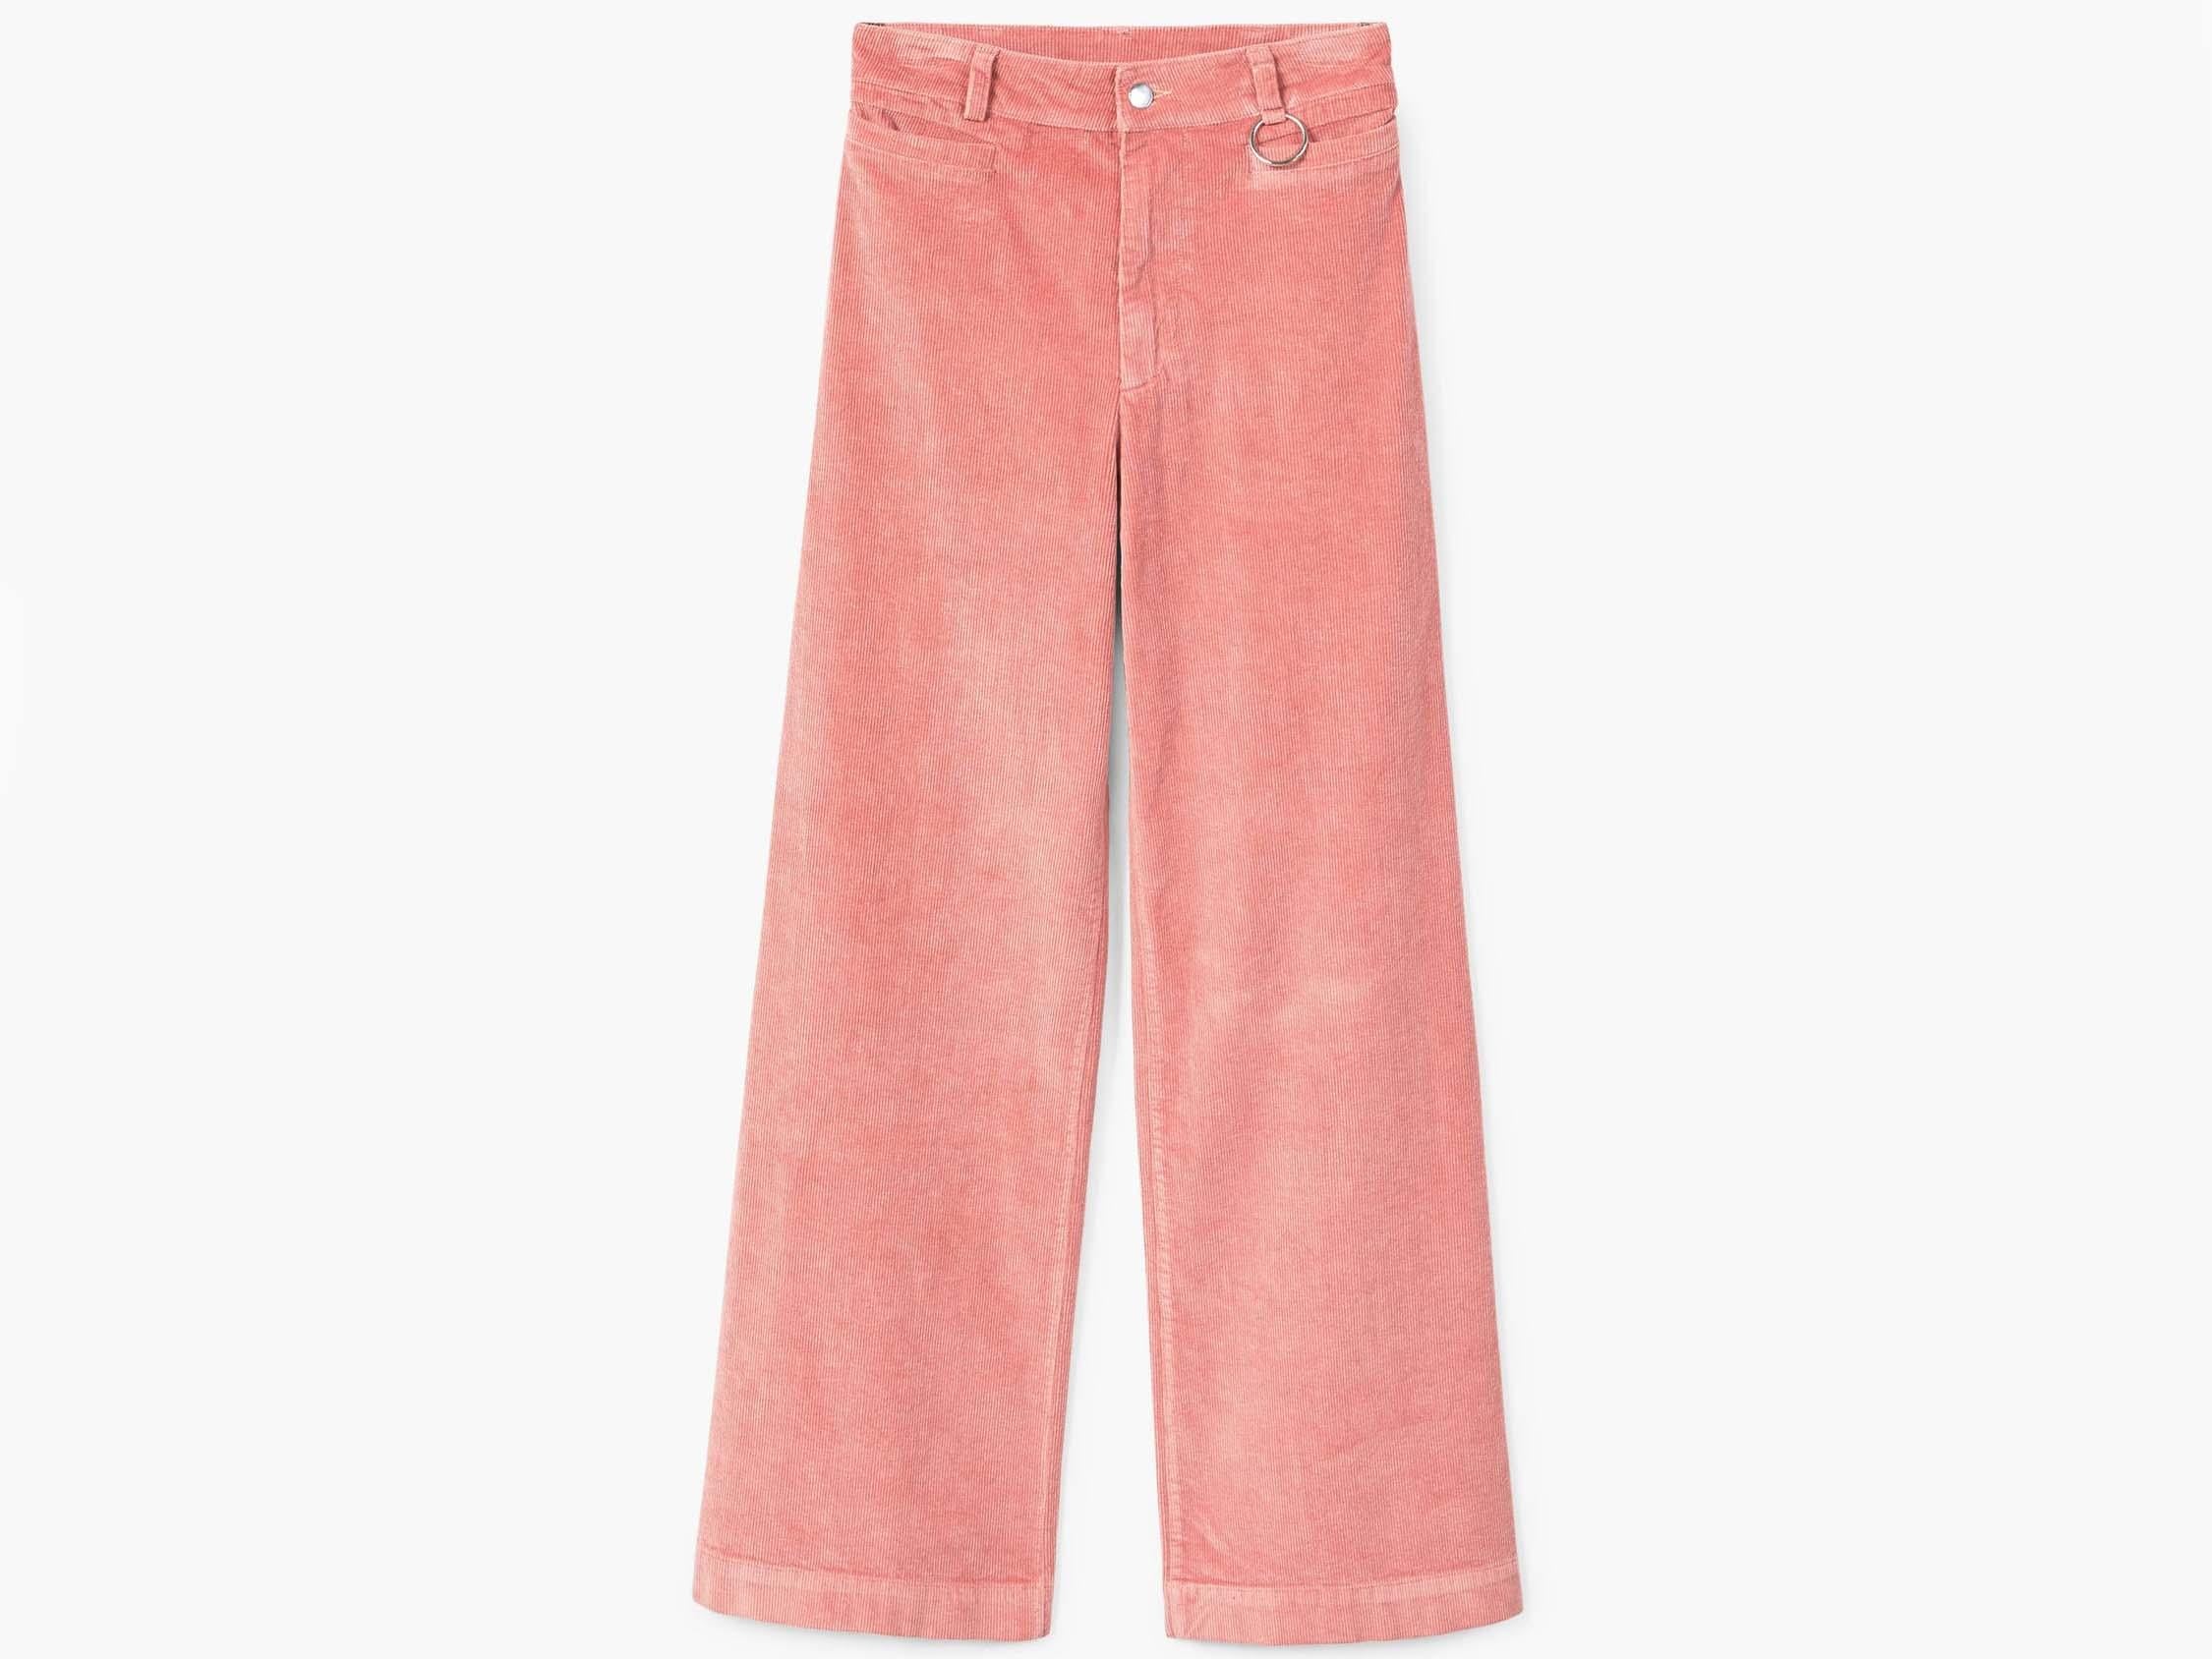 High-Waist Corduroy Trousers, £49.99, Mango